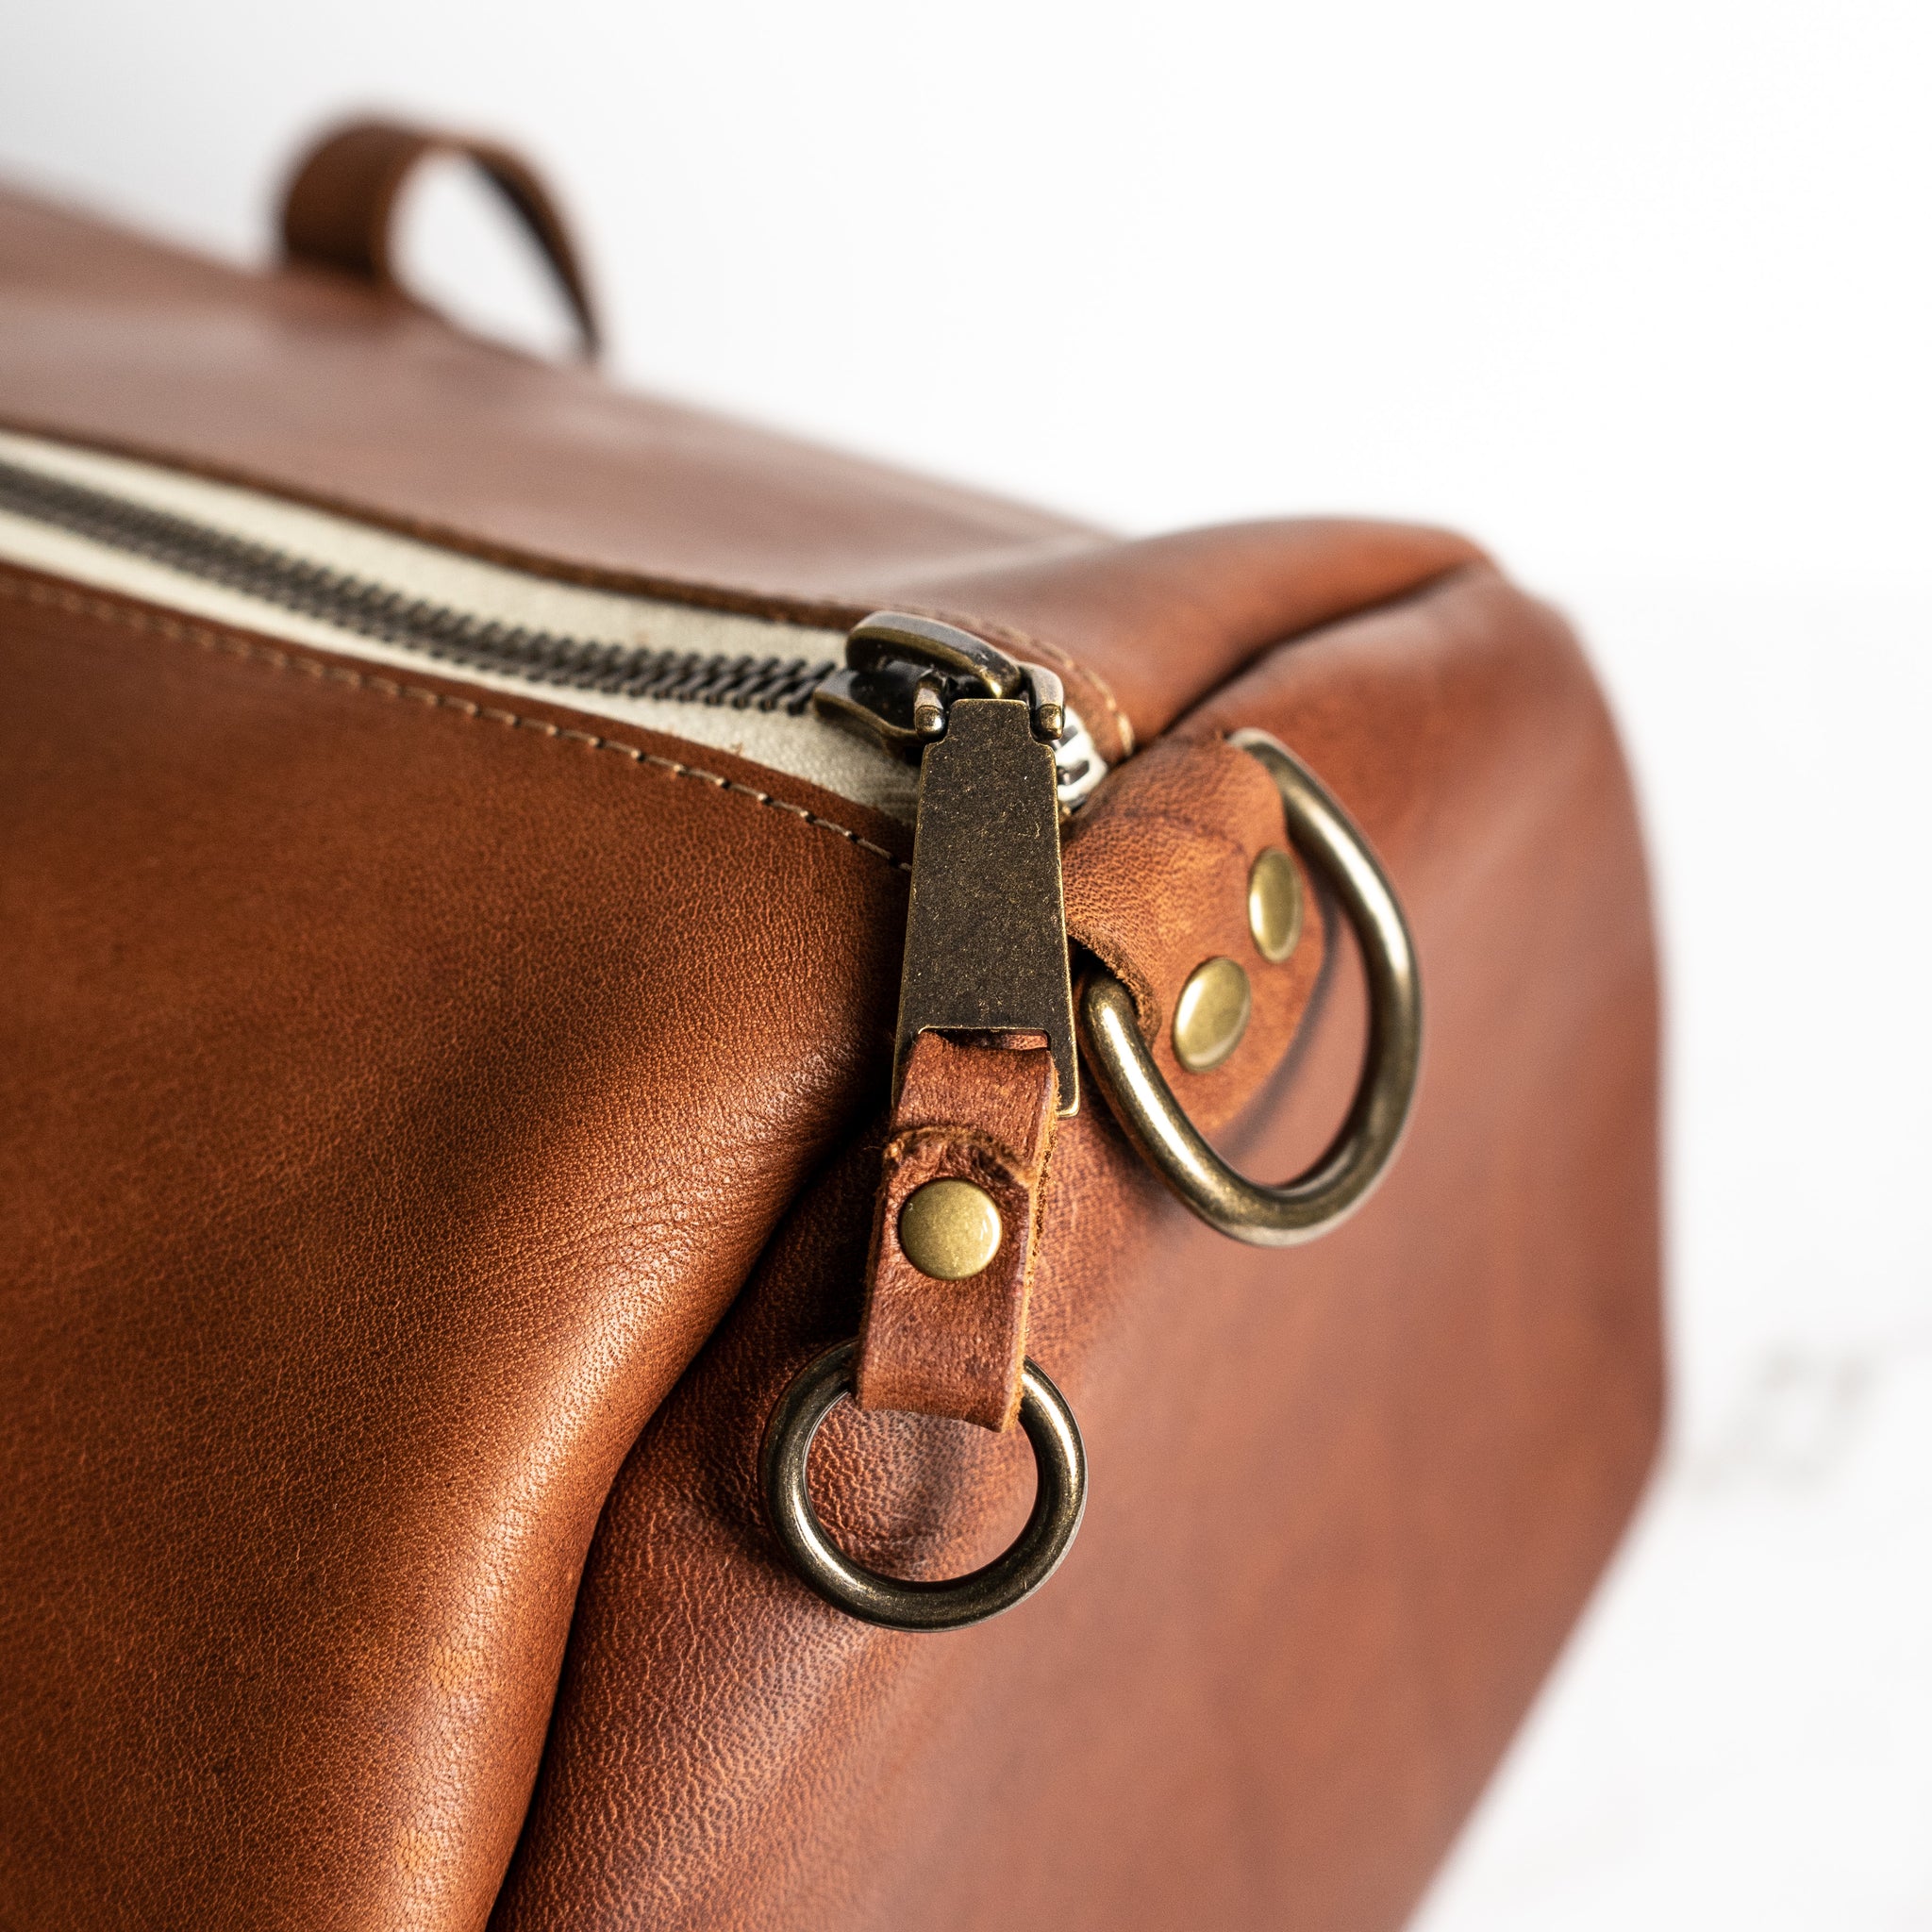 Leather Duffle Bag Men Personalized Weekender Bag Luggage 